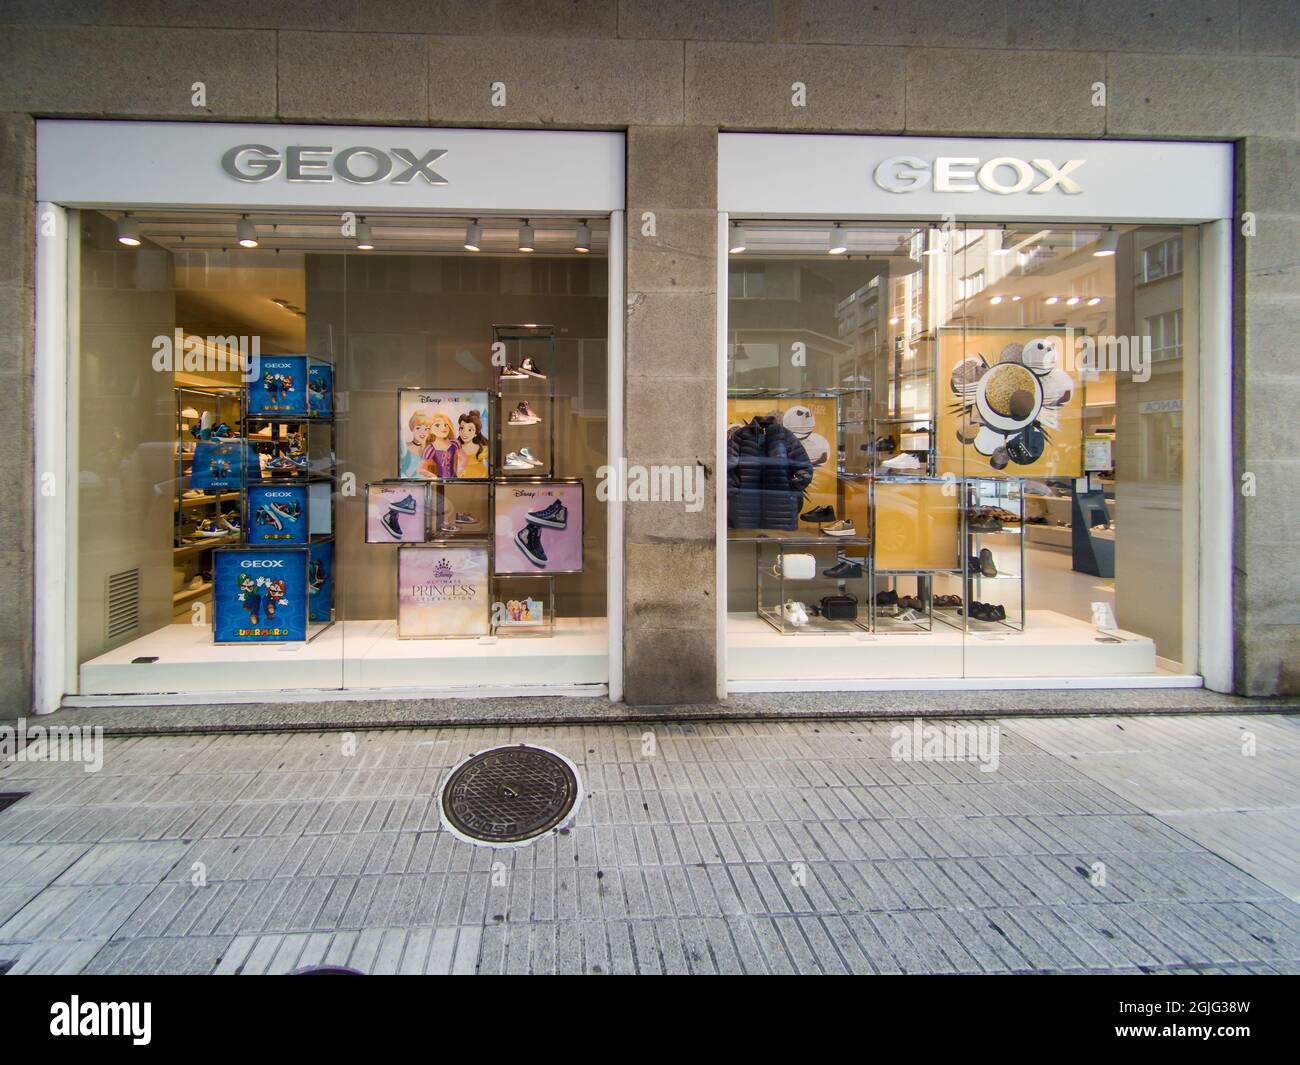 VIGO, SPAIN - Aug 23, 2021: The GEOX store facade in Vigo, Spain Stock  Photo - Alamy